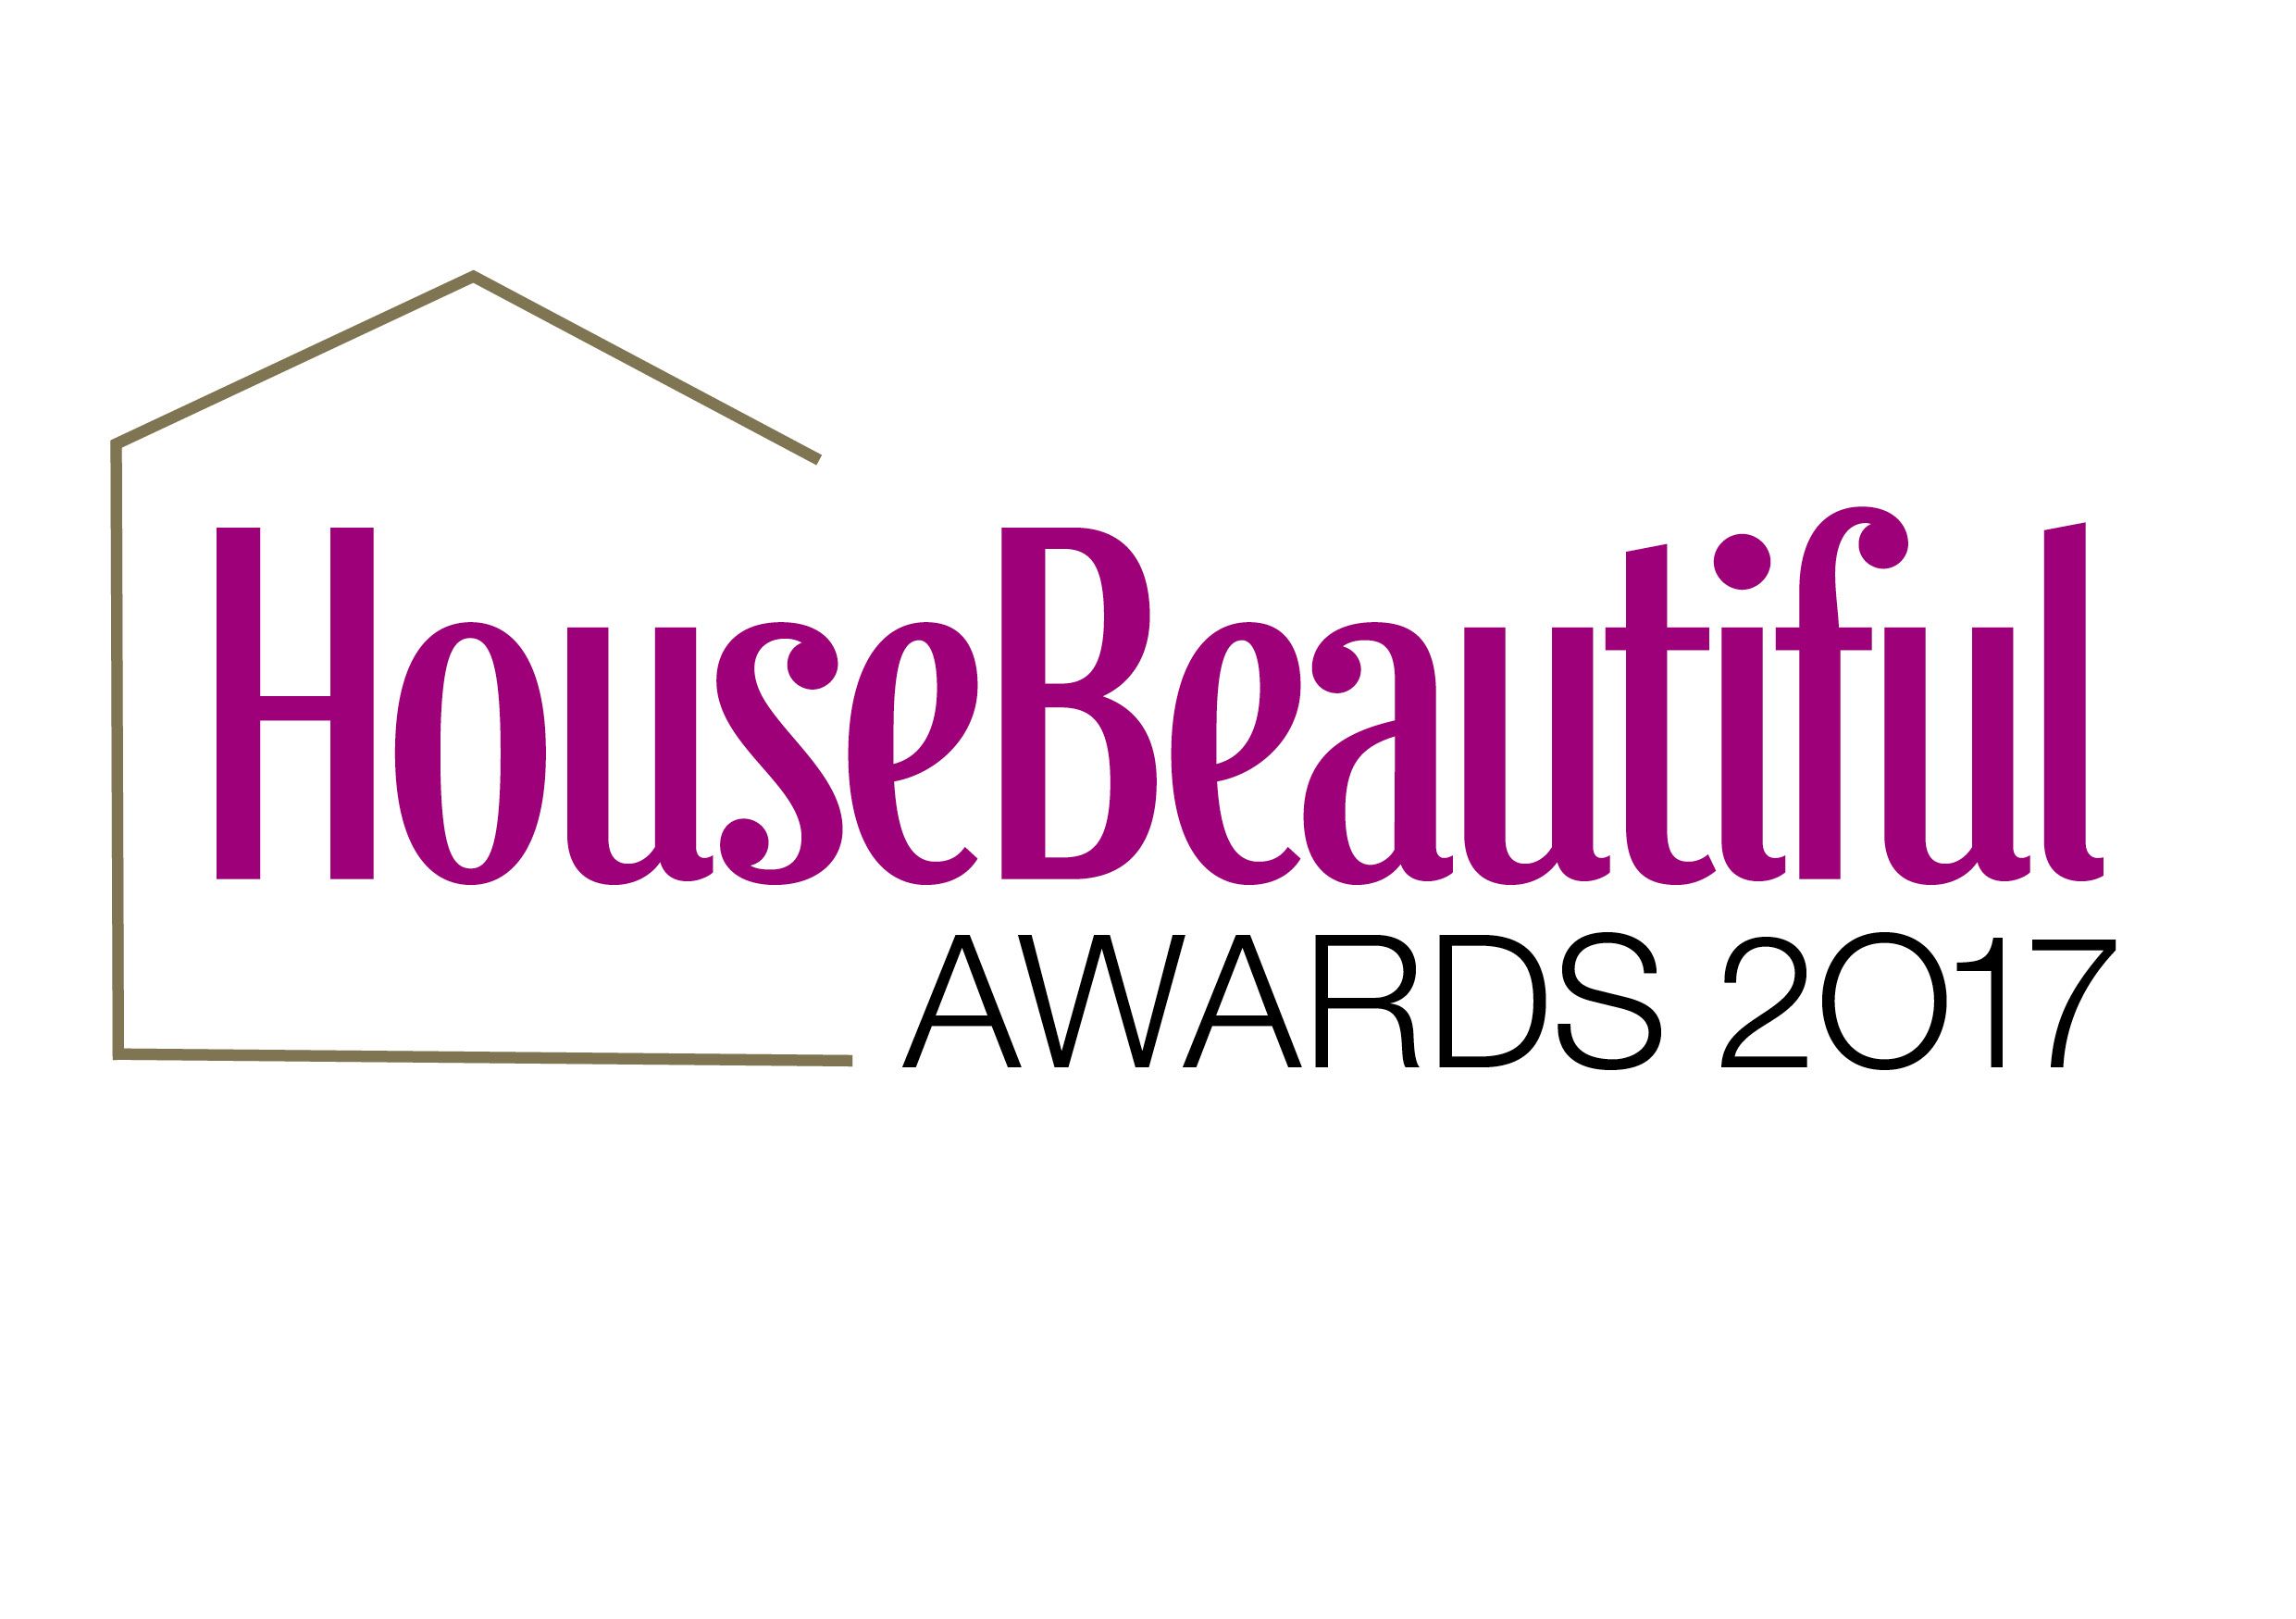 House Beautiful Awards 2017